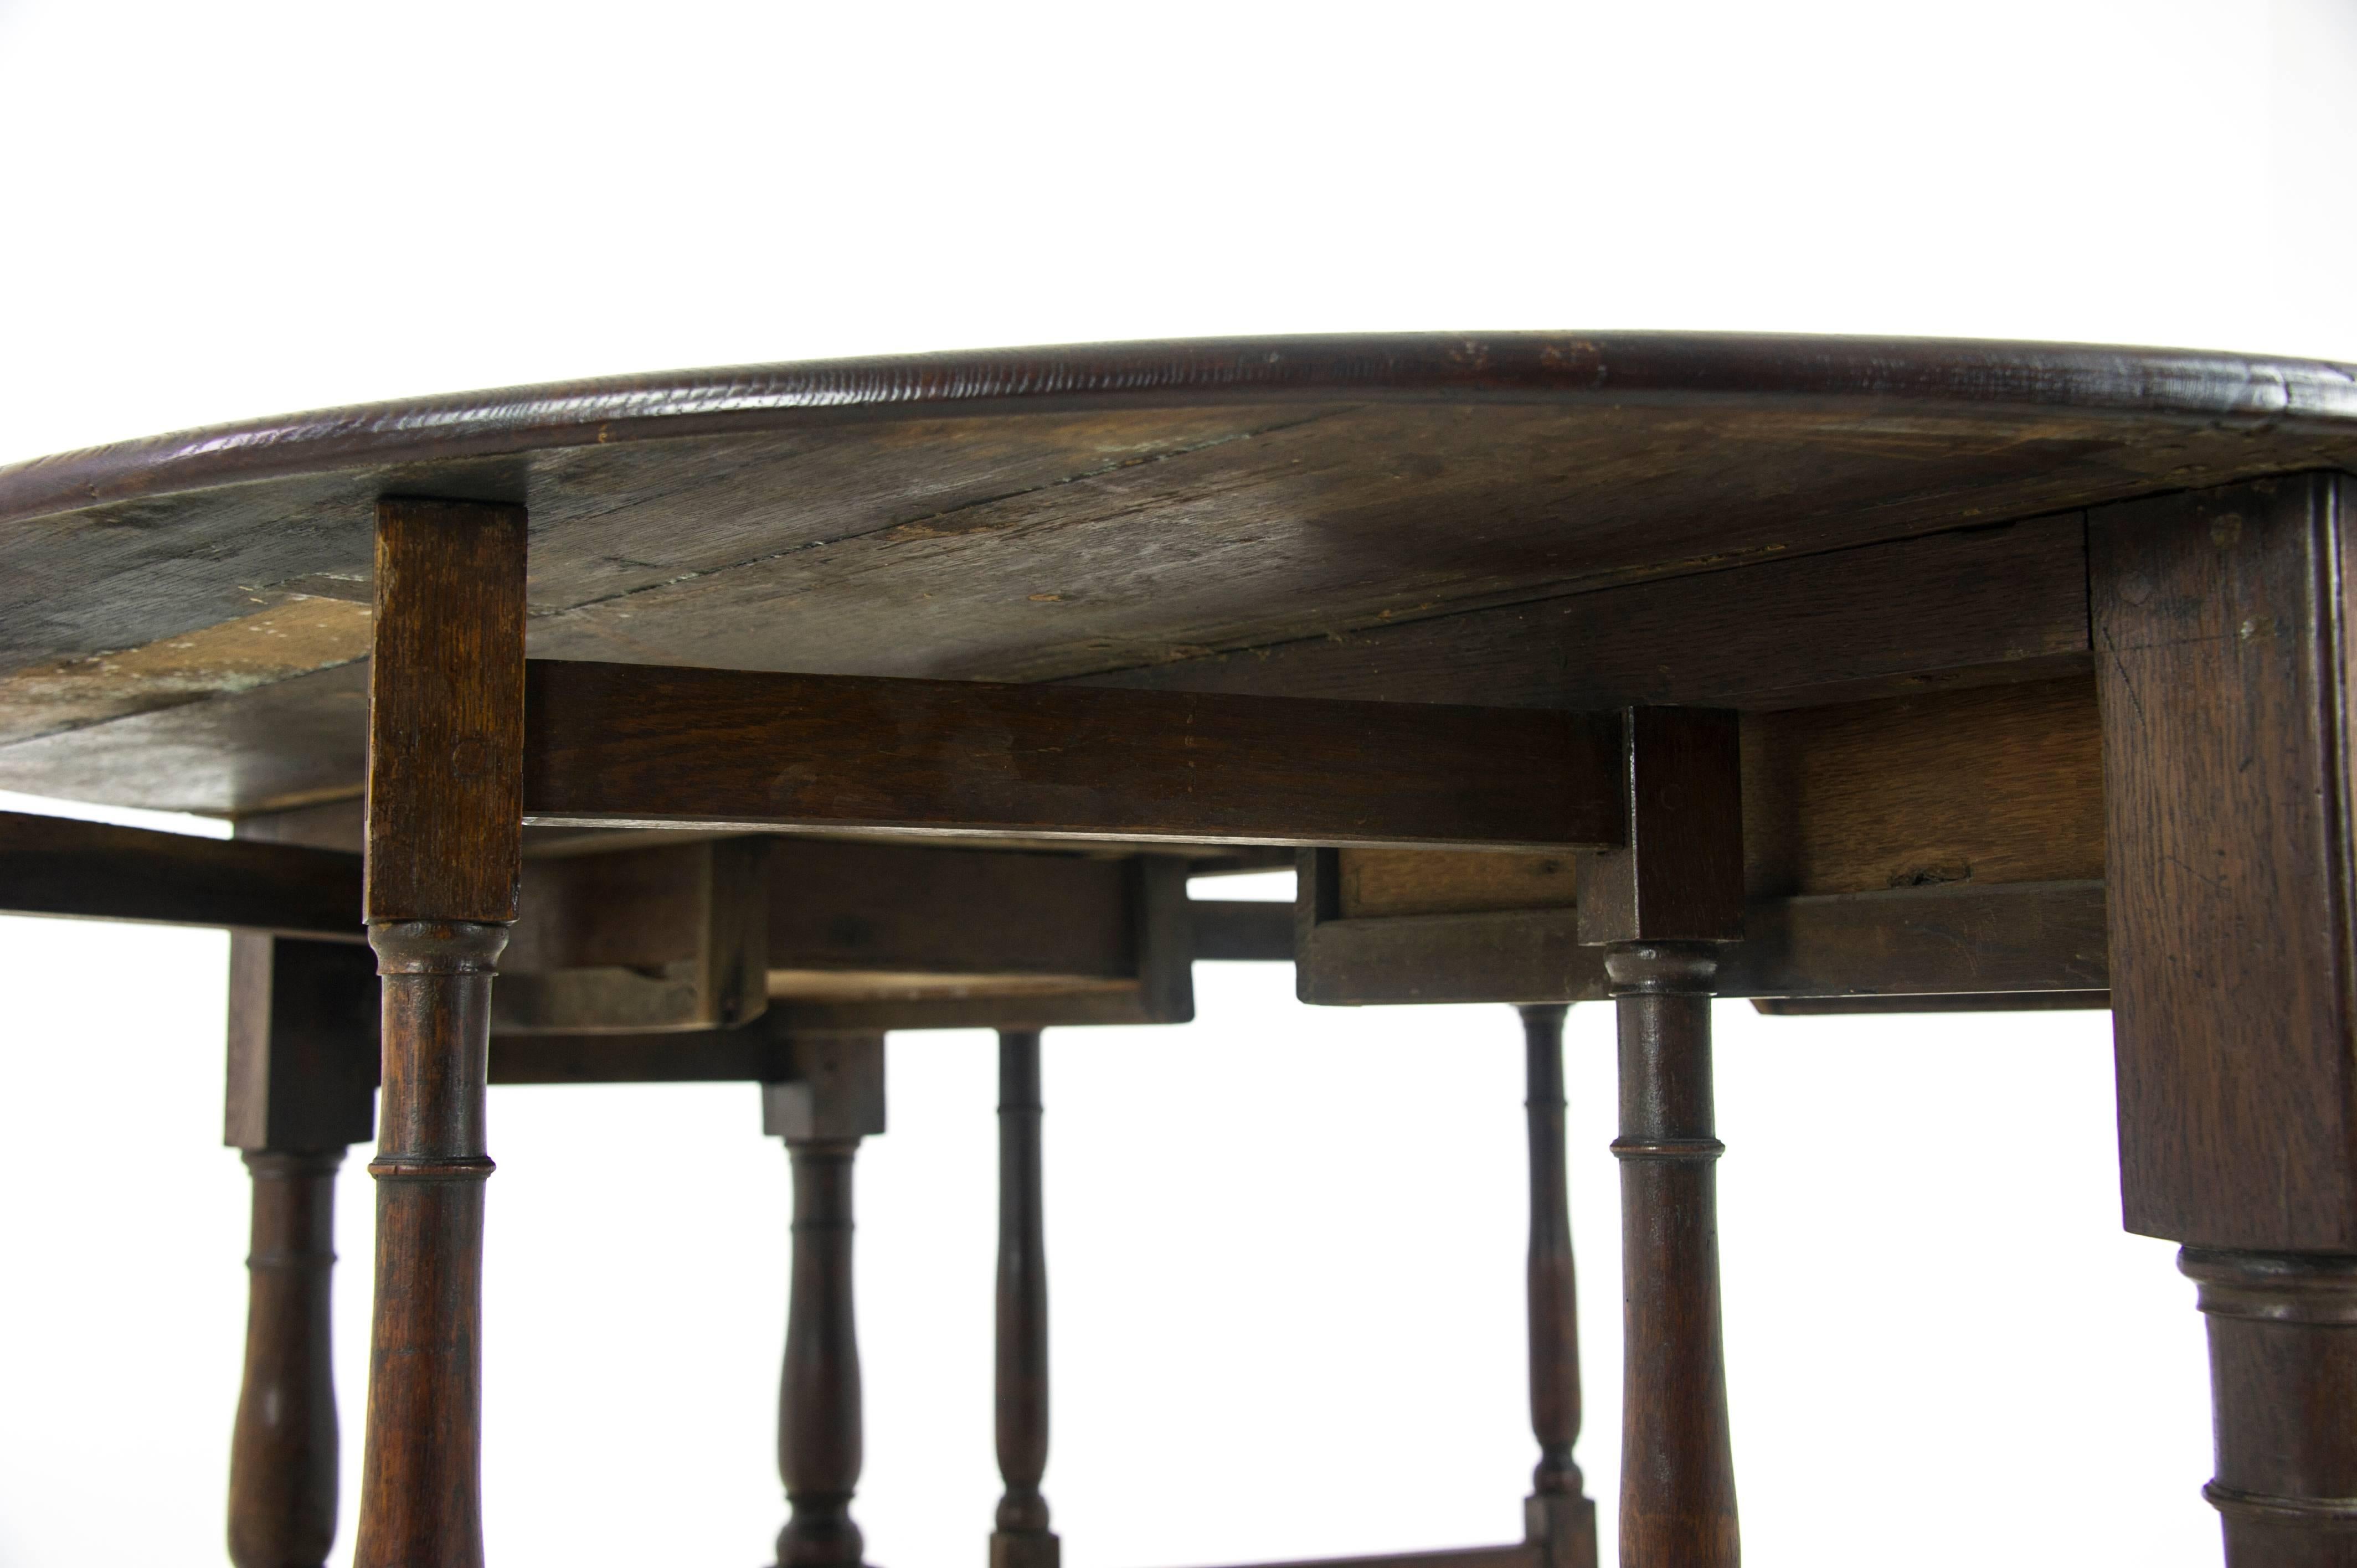 Early 19th Century Antique Gateleg Table, Drop-Leaf Table, Oak, Scotland 1800, B1031